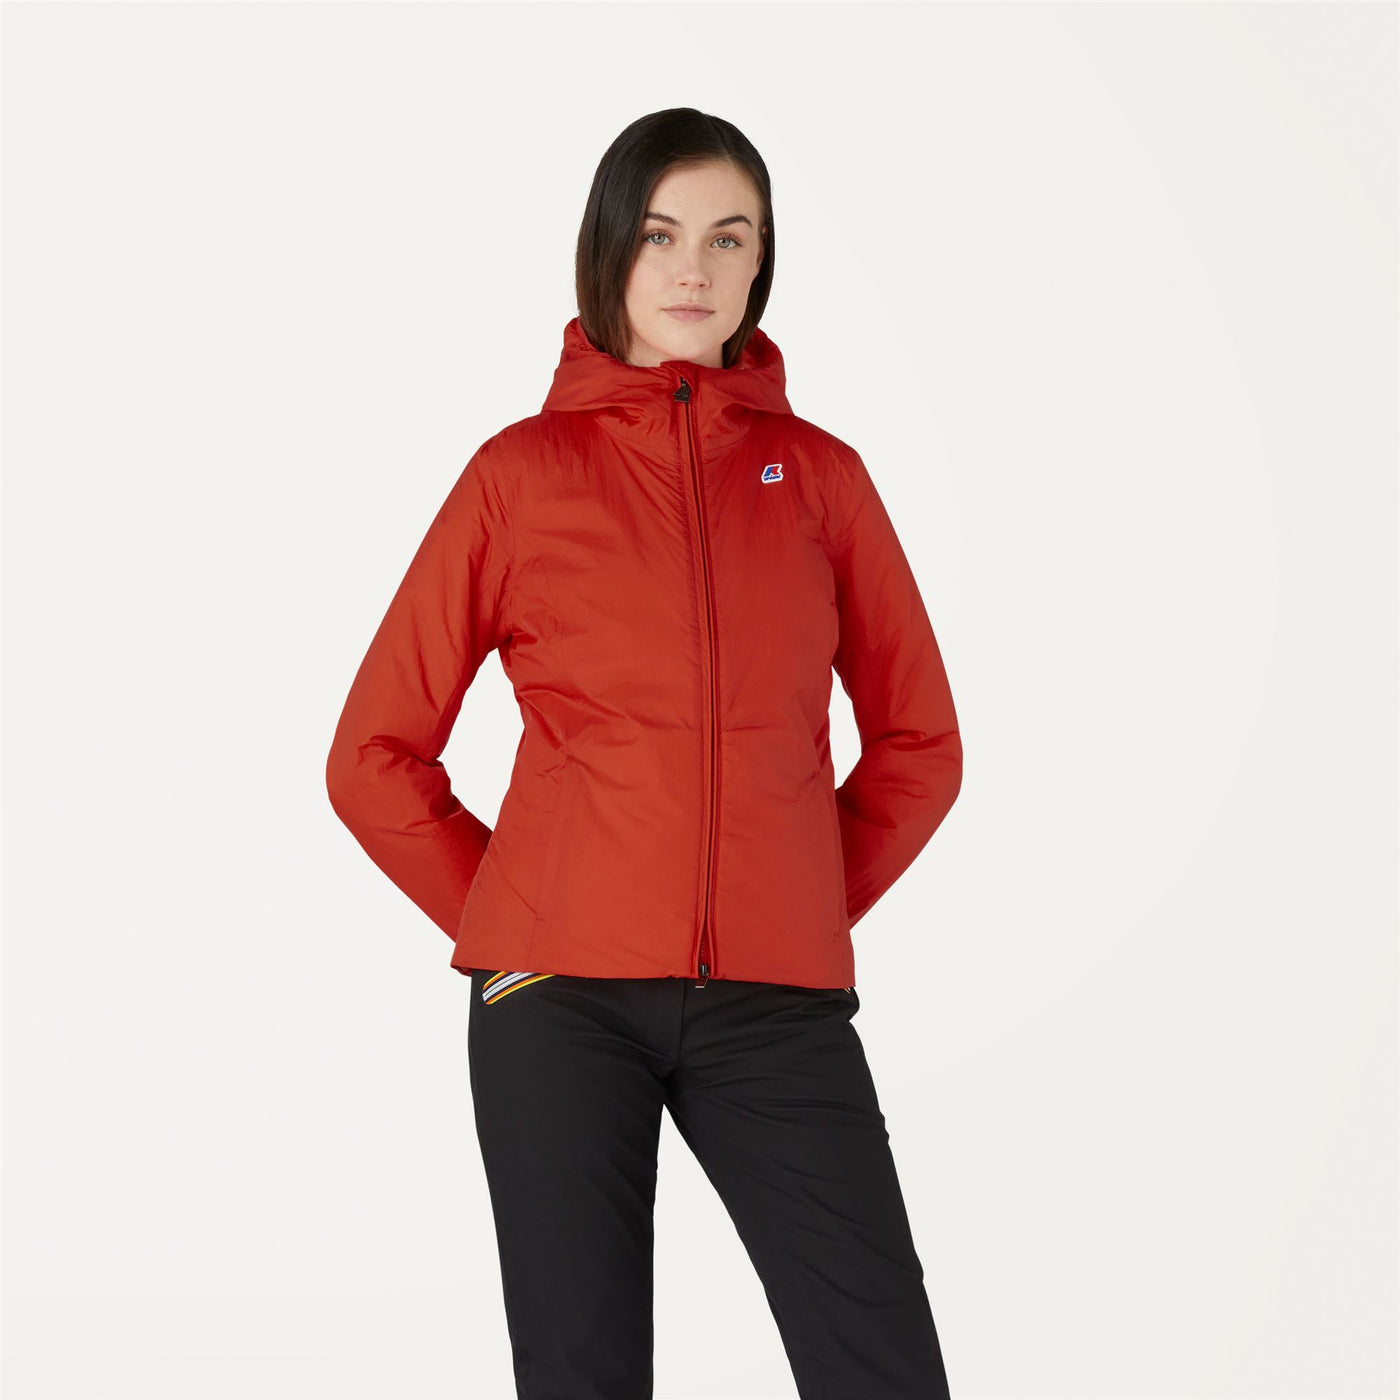 Jackets Woman LILY WARM PAPER SATIN Short ORANGE REDDISH Dressed Back (jpg Rgb)		